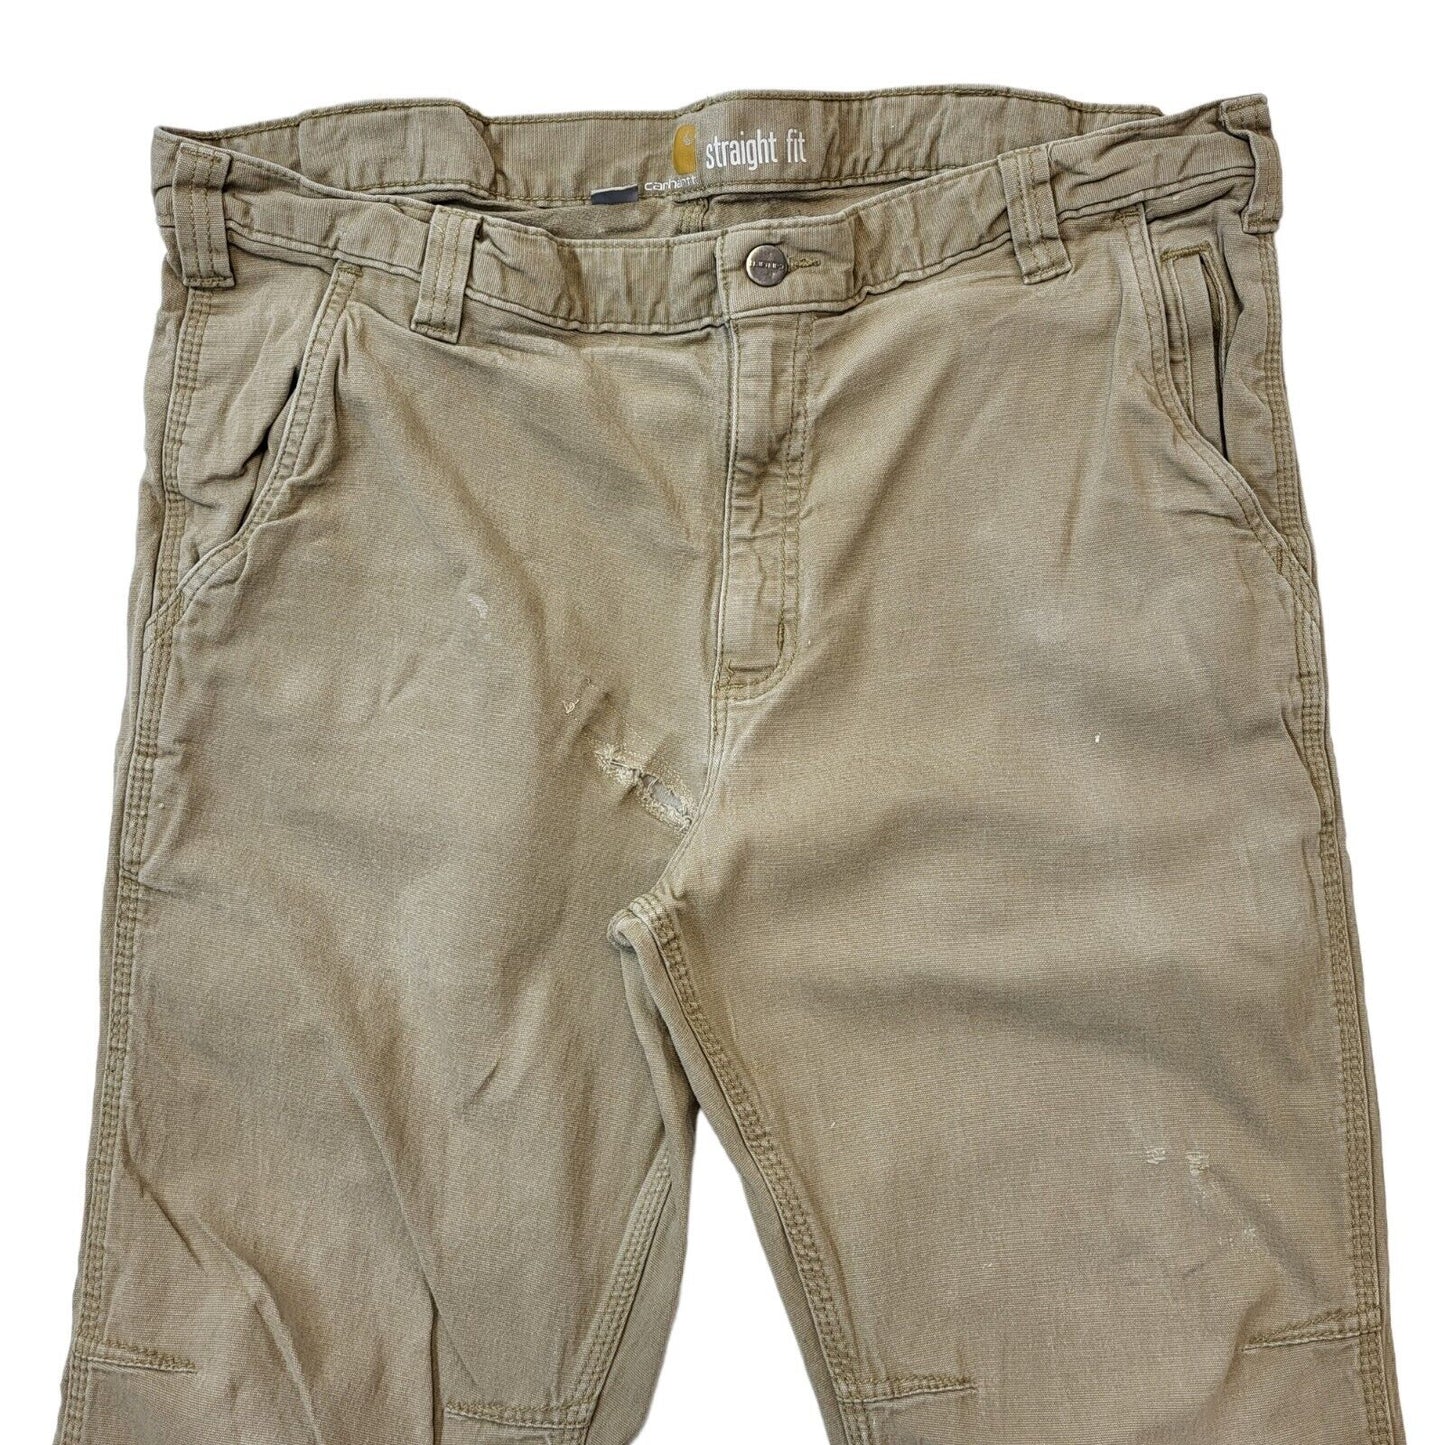 Carhartt Trousers (2XL)